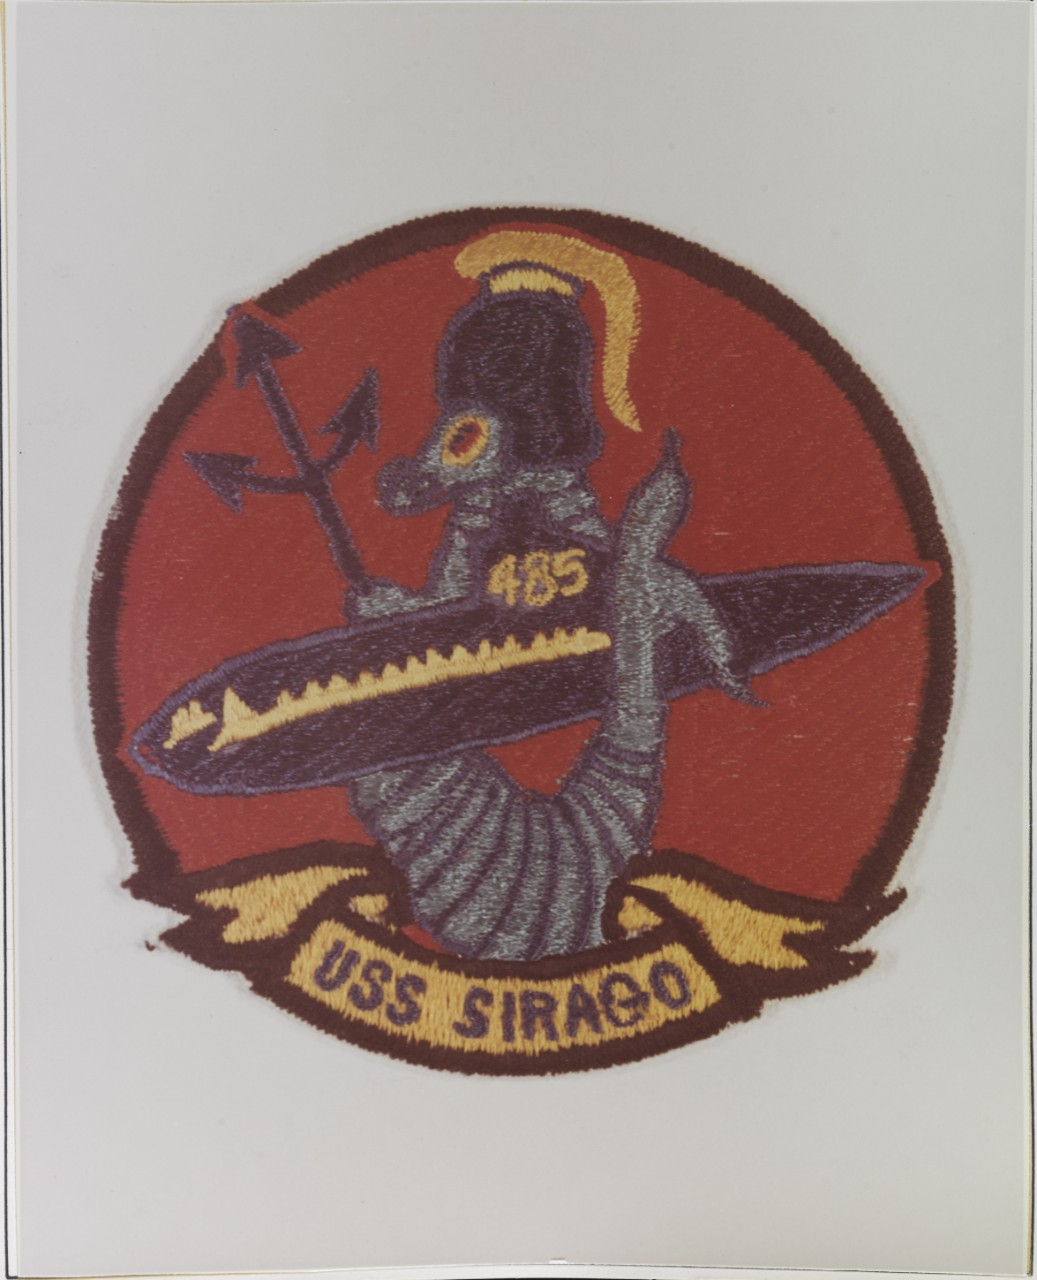 Insignia: USS SIRAGO (SS-485)